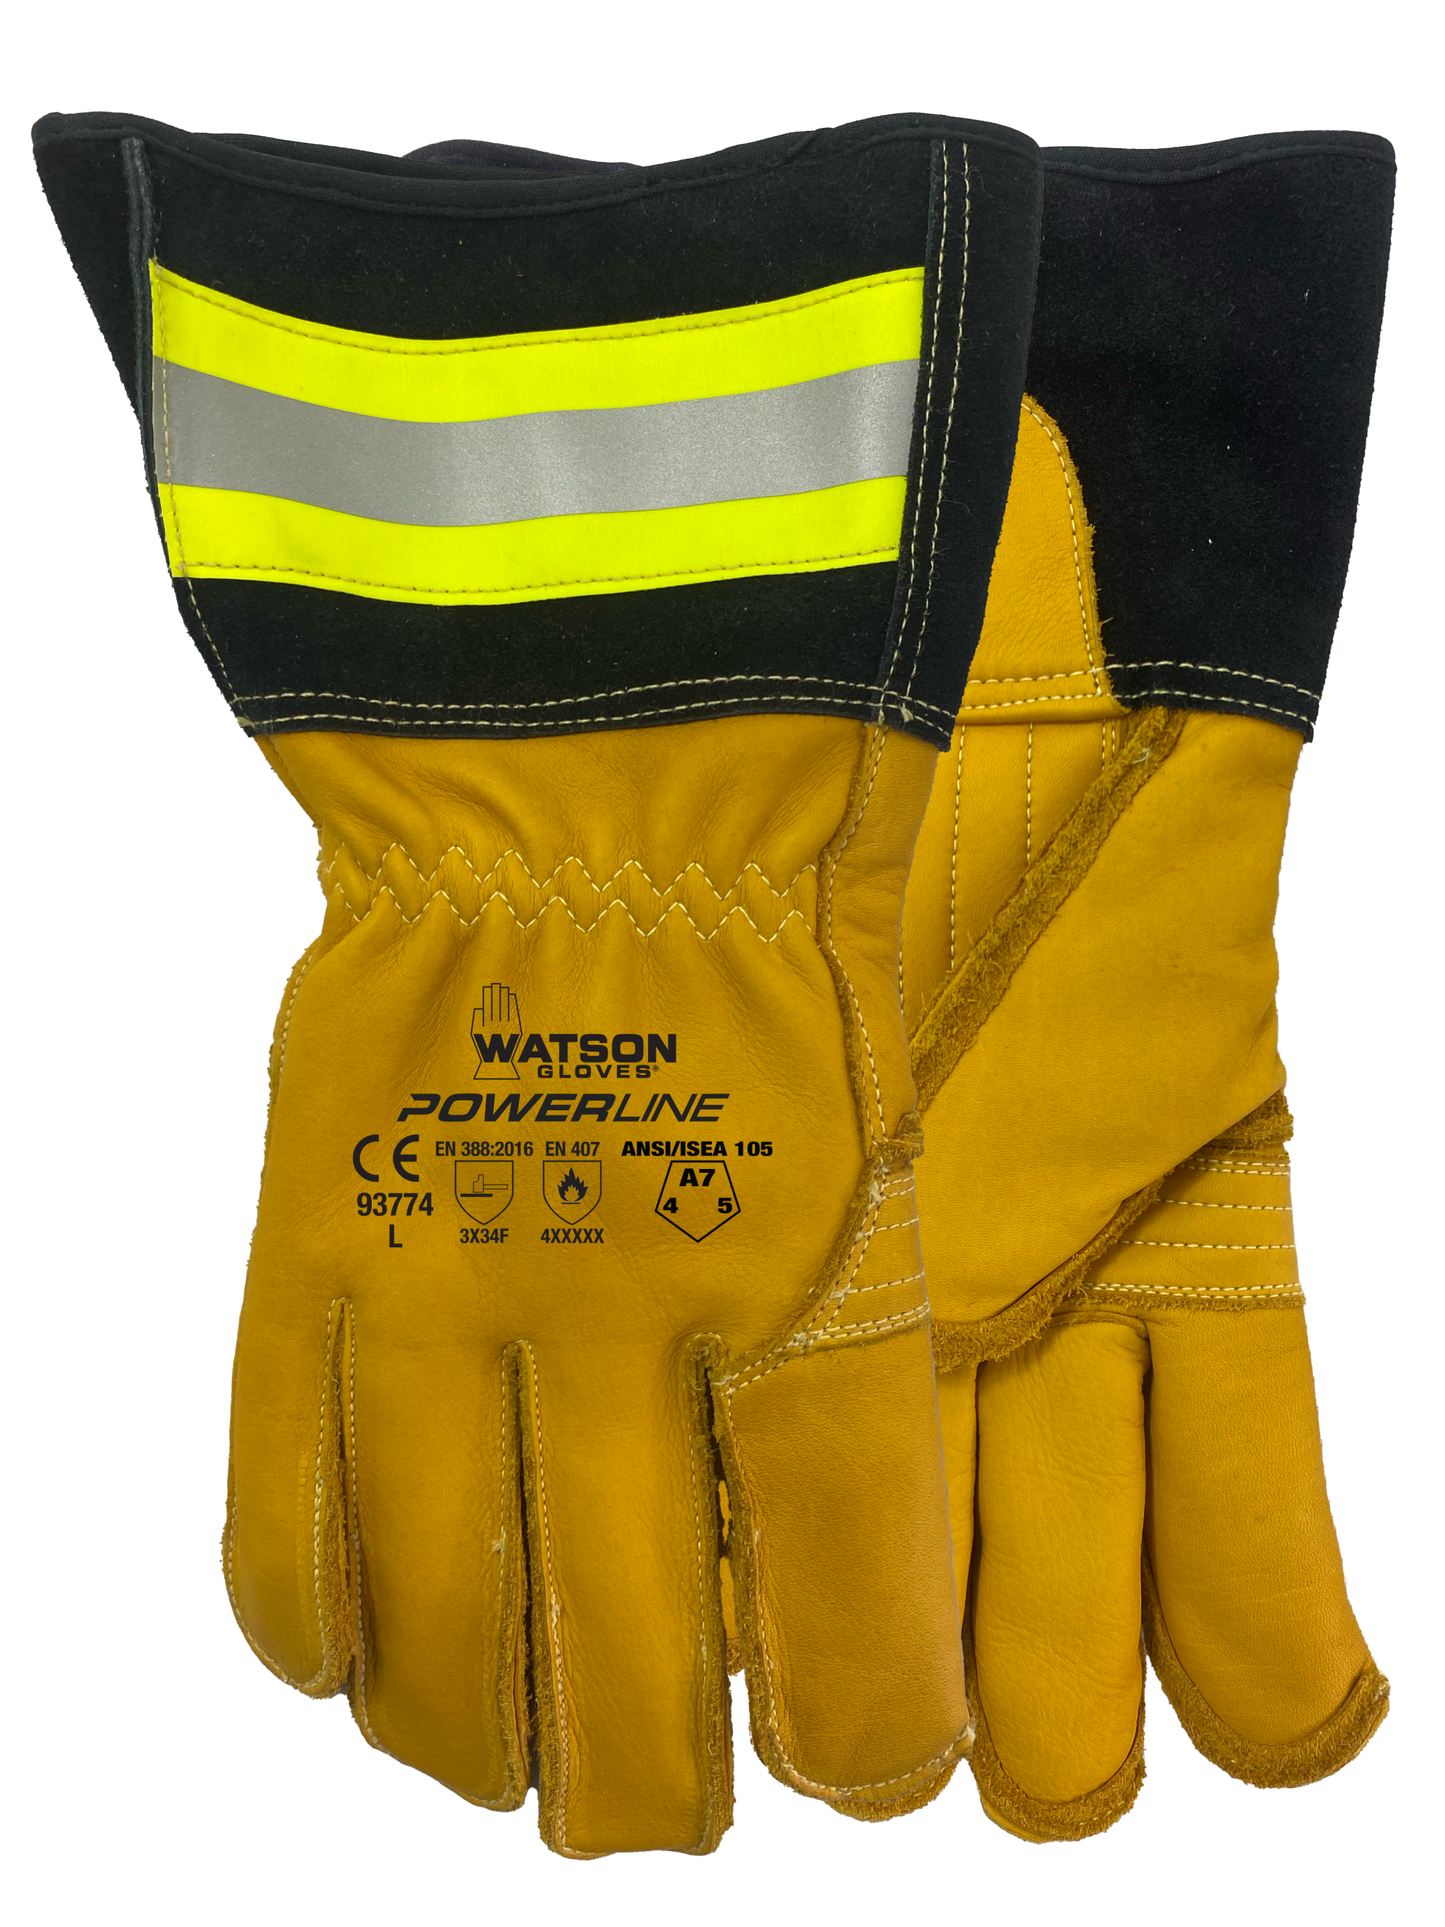 Watson Winter Powerline Gloves Pack of 6 Pairs